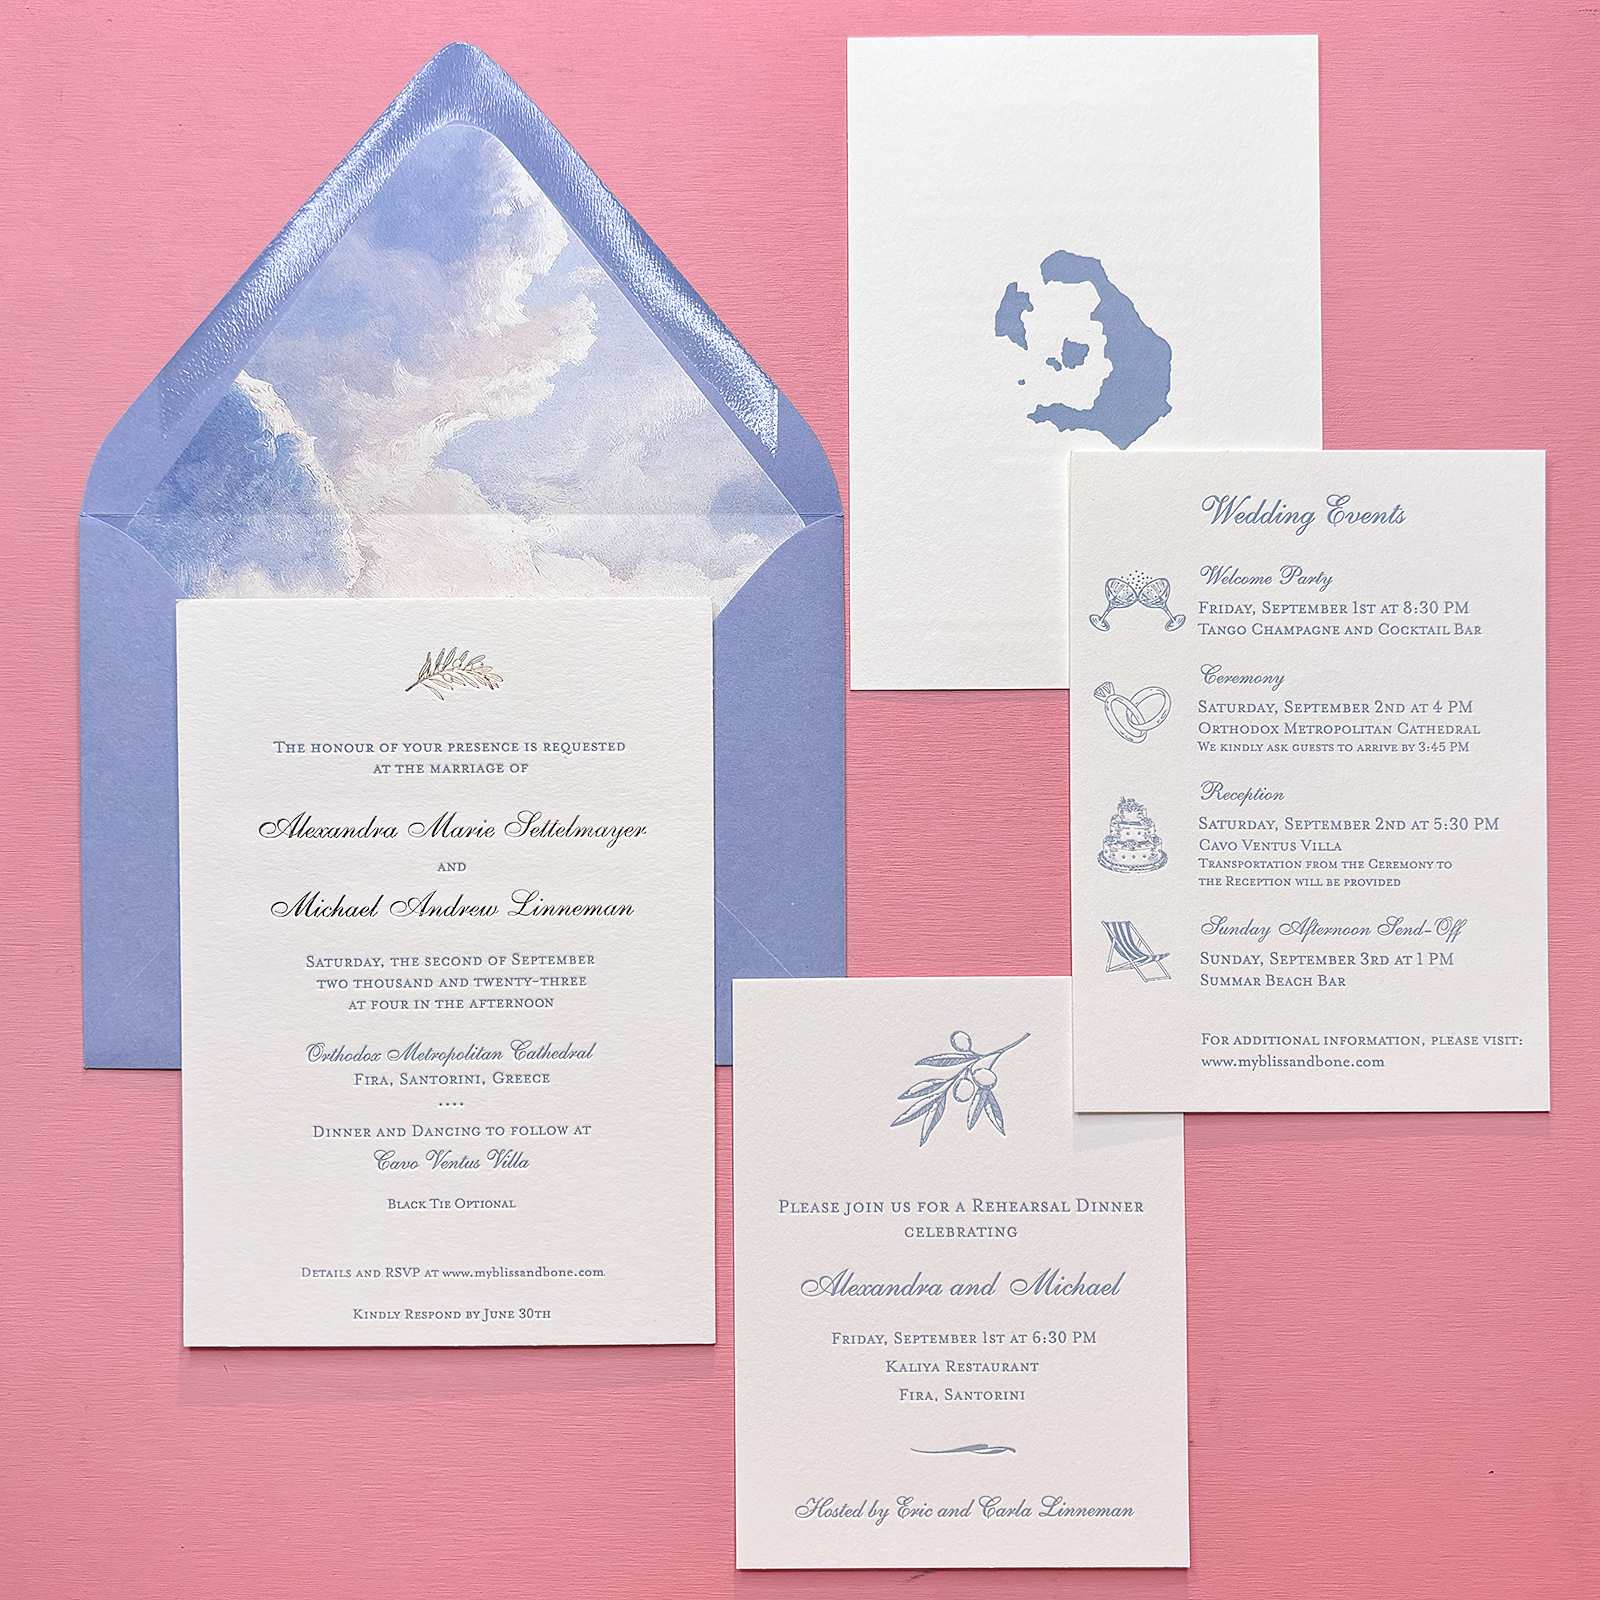 Letterpress wedding invitation in Greece